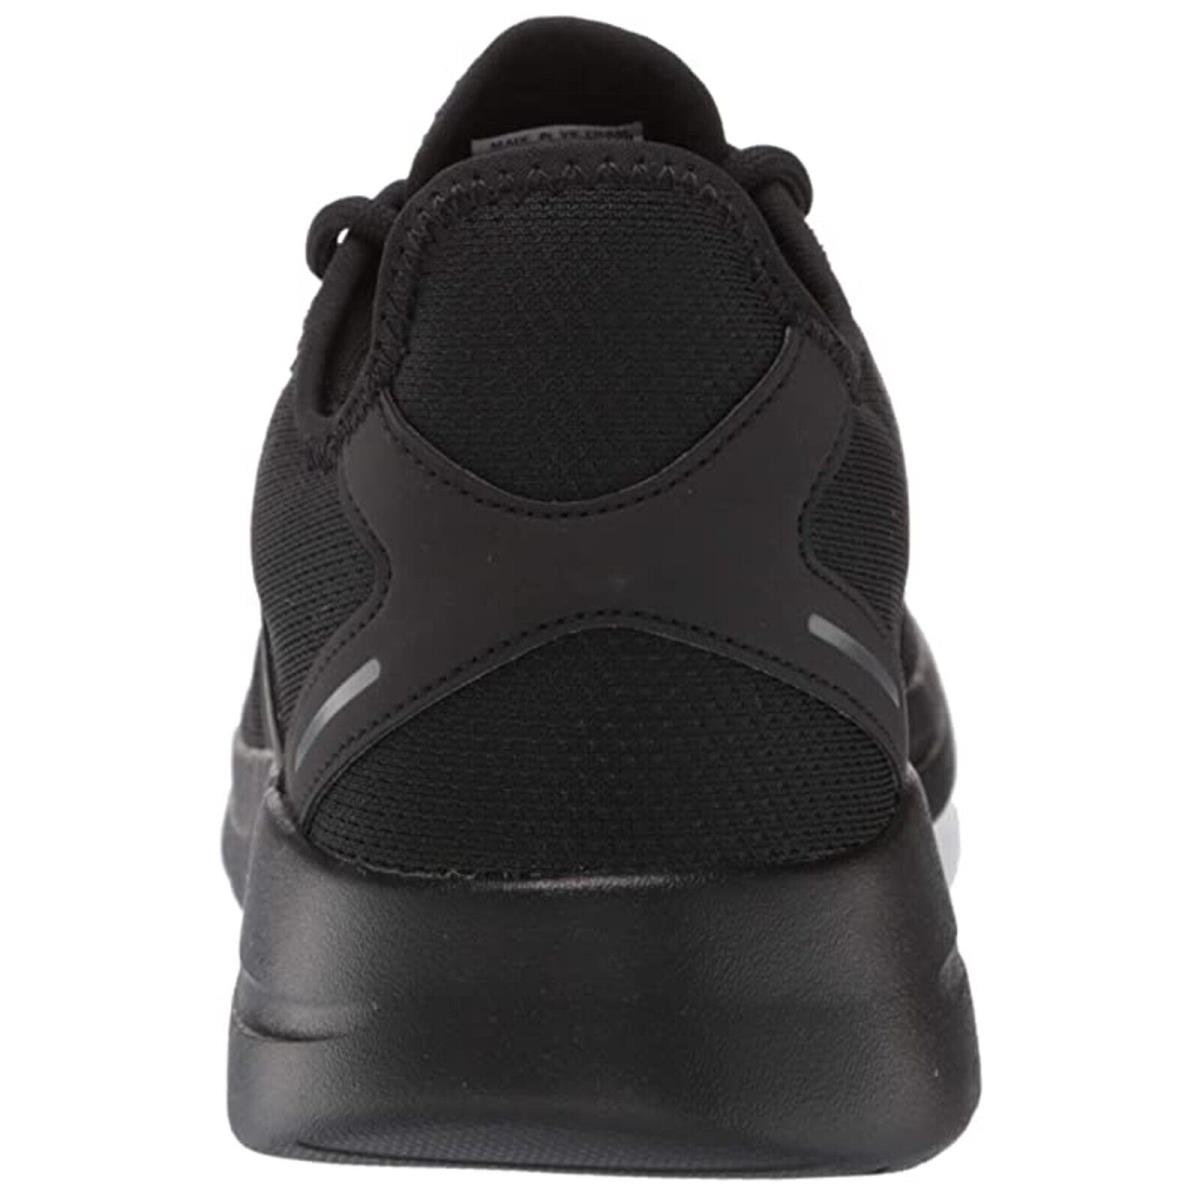 Adidas shoes Lite Racer - Black 1